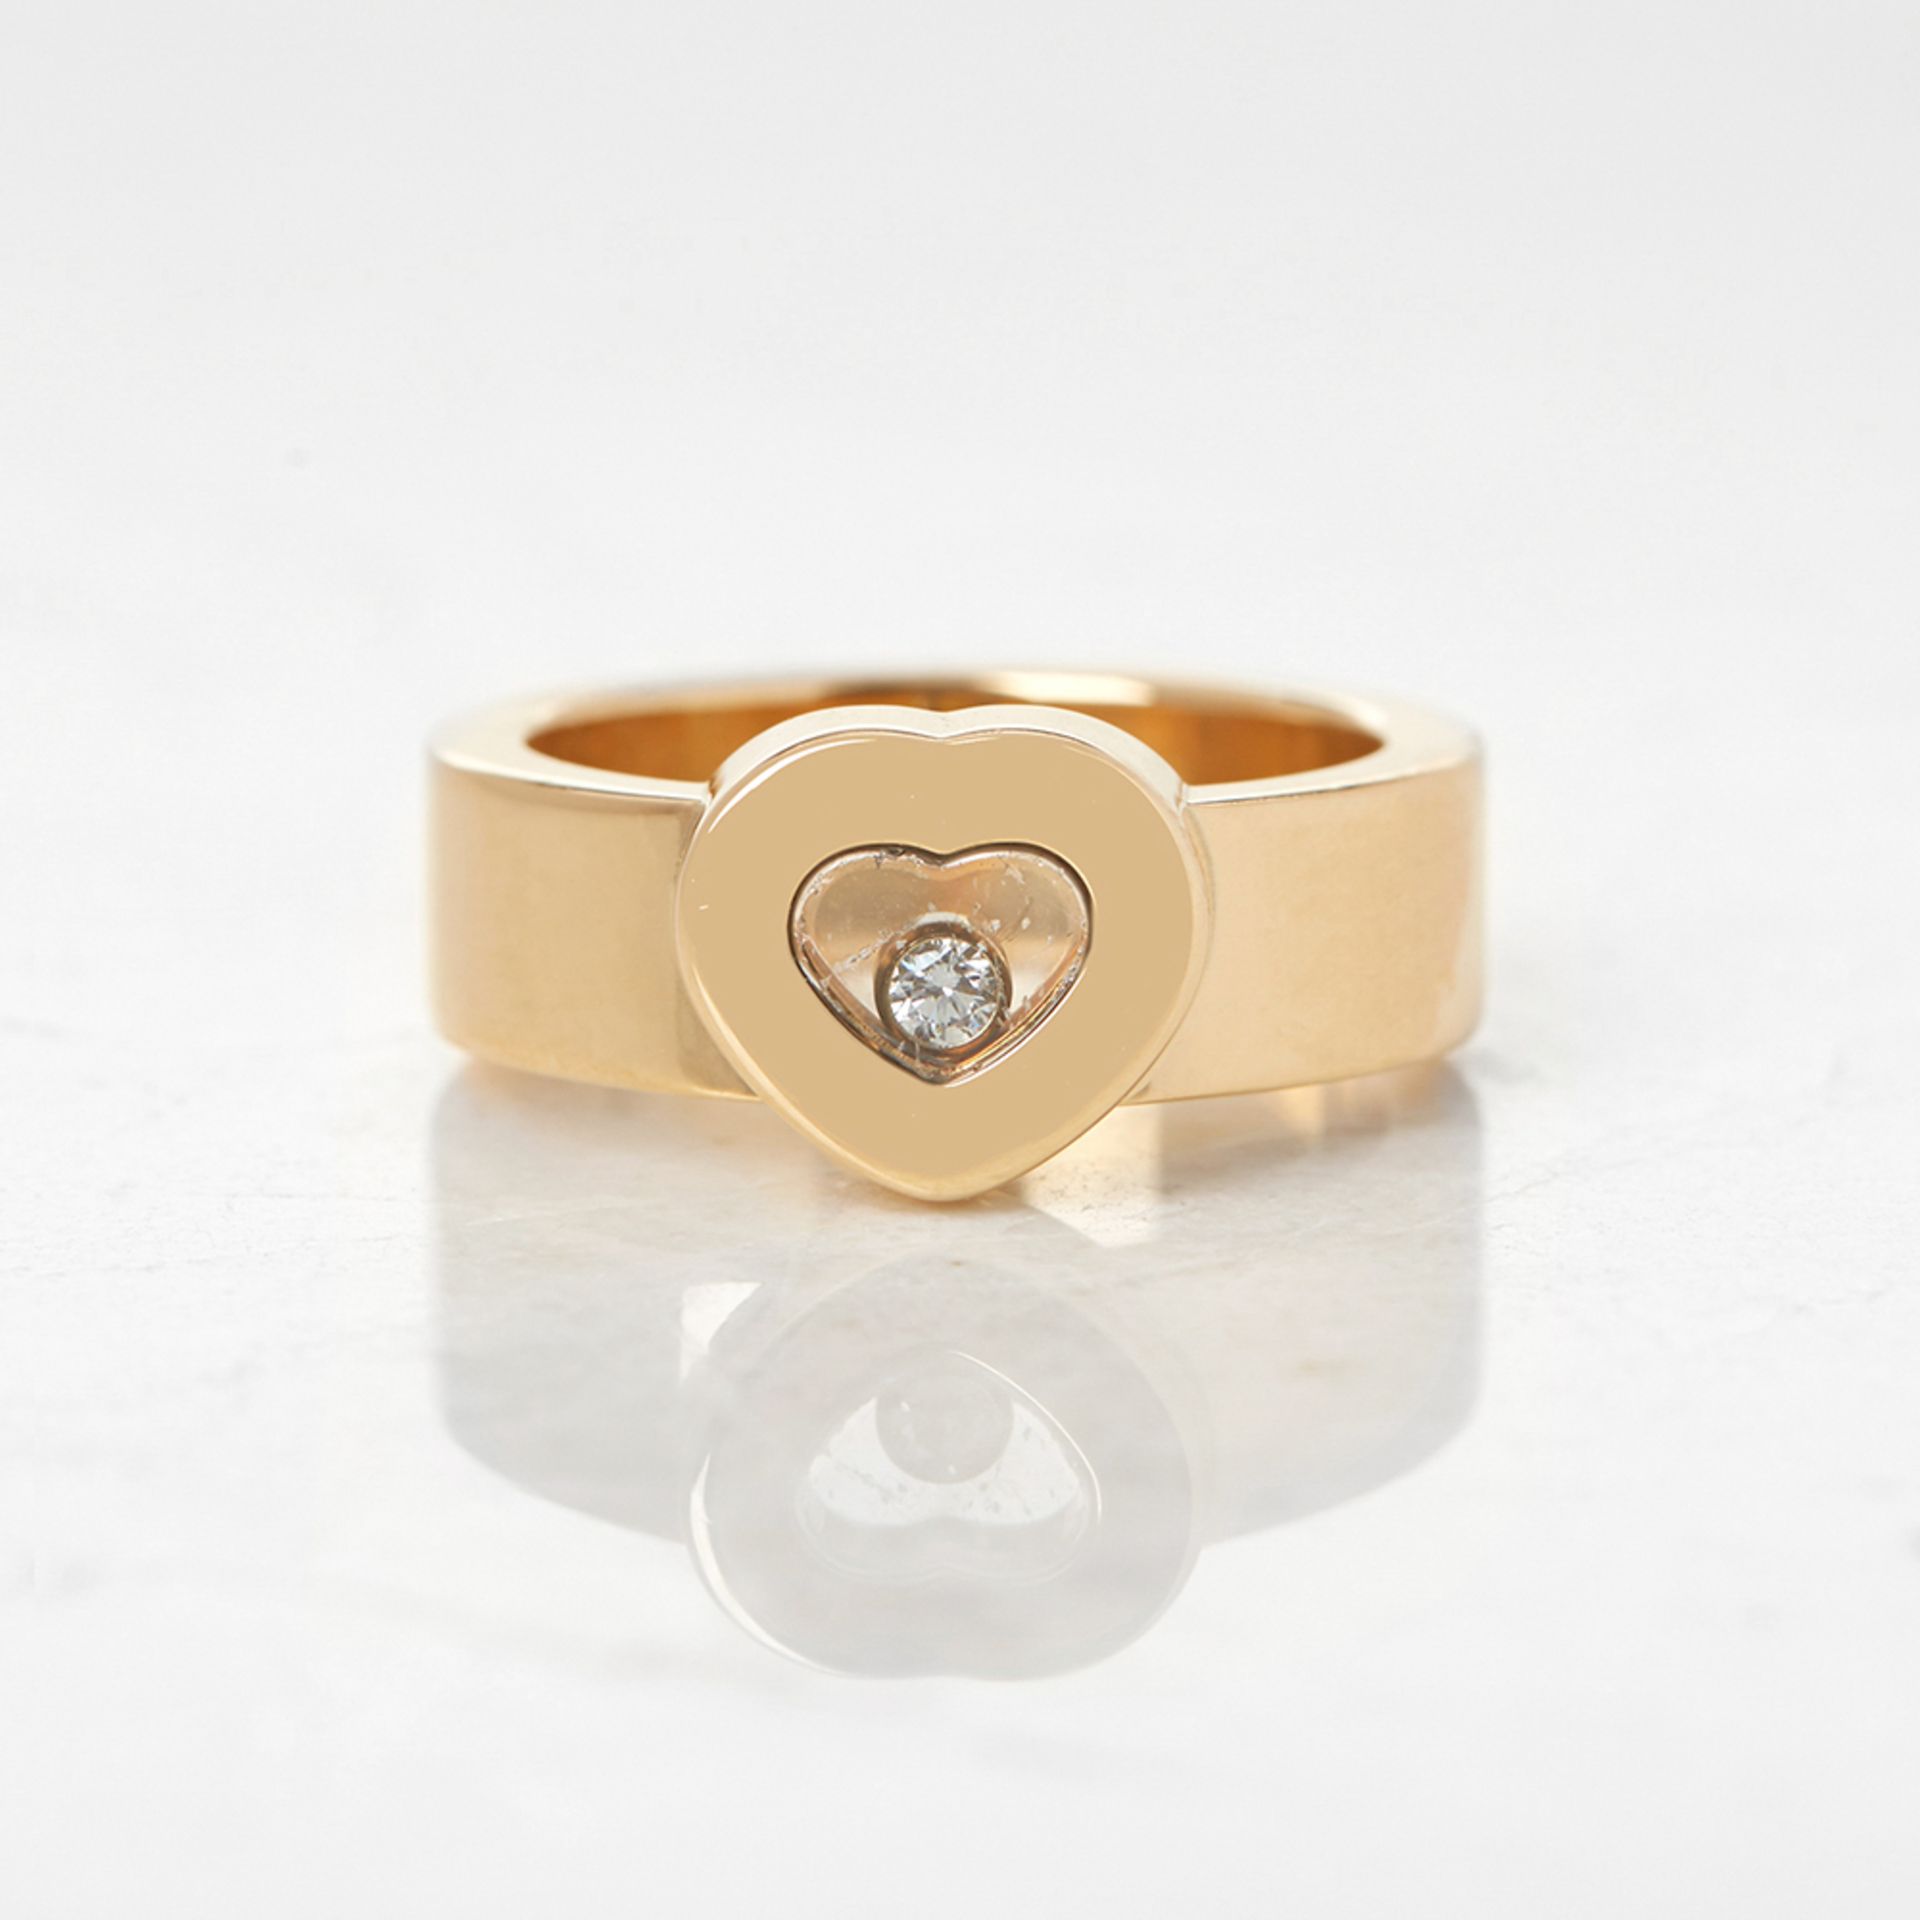 Chopard 18k Yellow Gold Heart Happy Diamonds Ring Size M 1/2 - Image 2 of 6